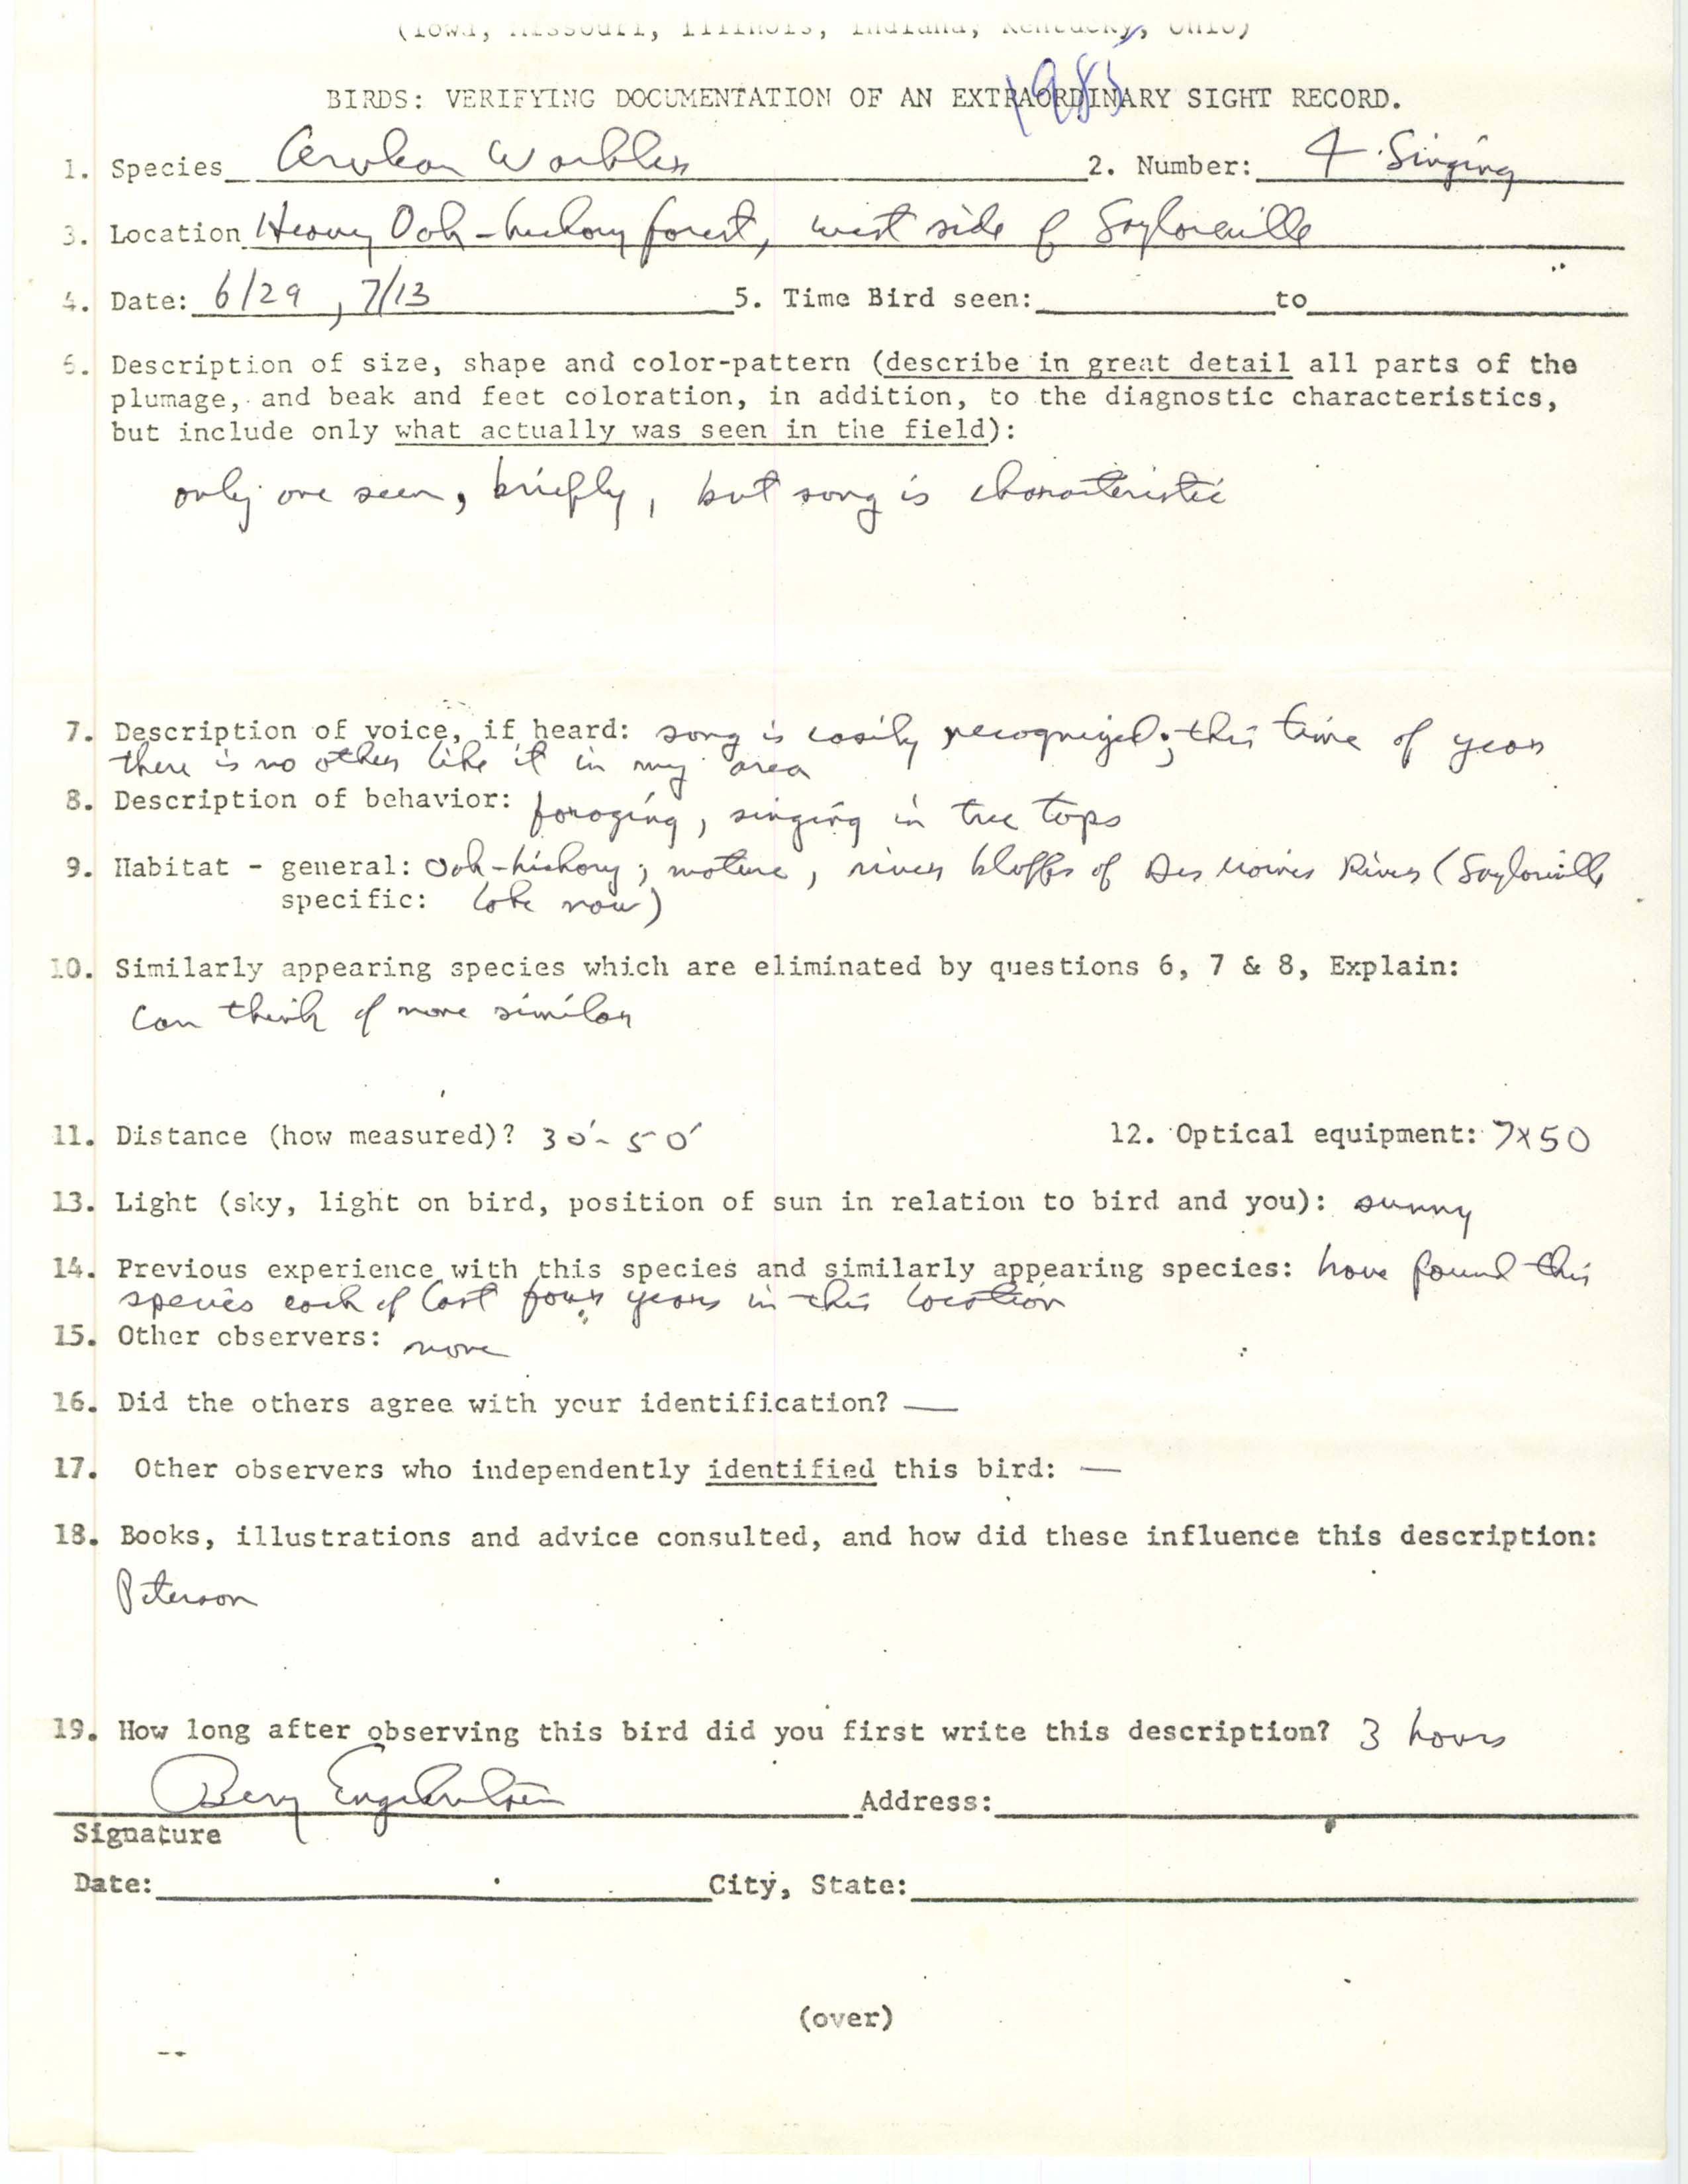 Rare bird documentation form for Cerulean Warbler at Saylorville Lake in 1985